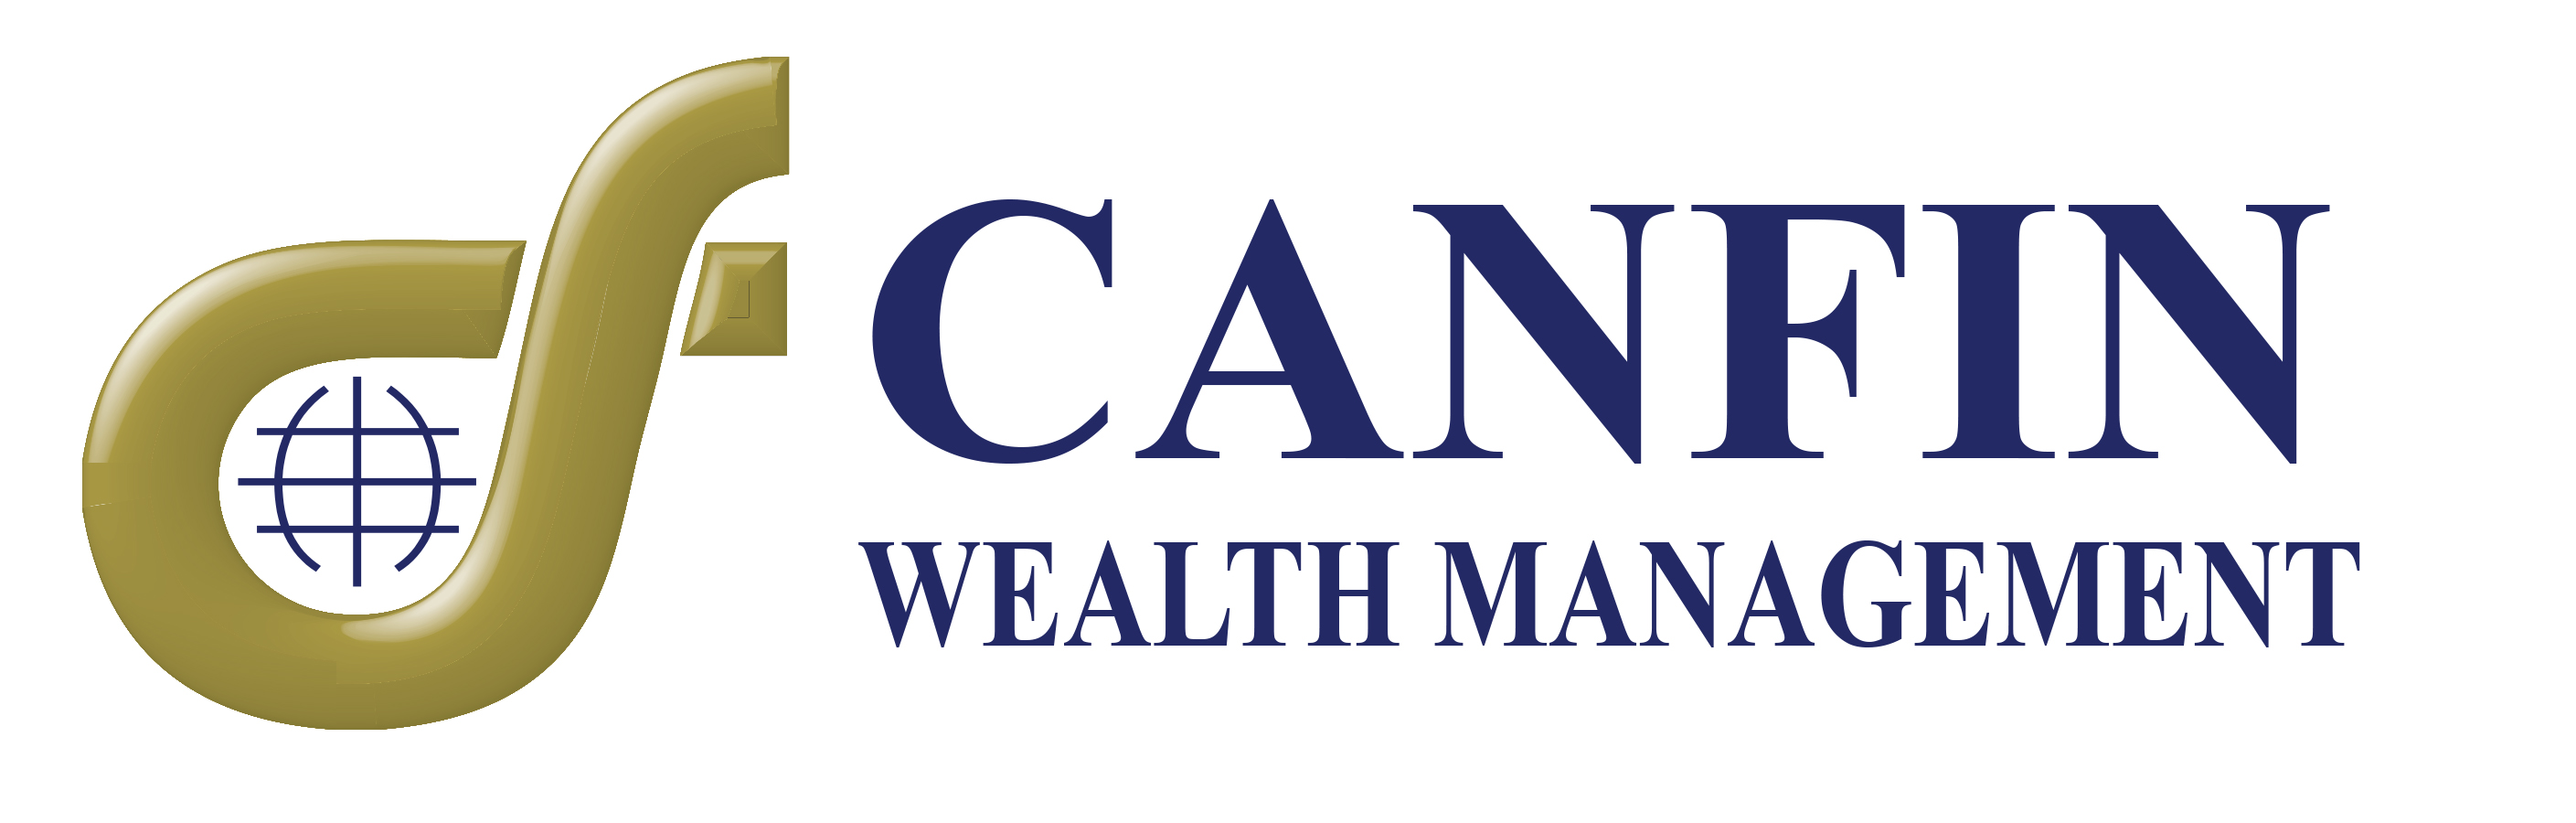 Jim Laszlo - CANFIN Financial Group - Logo